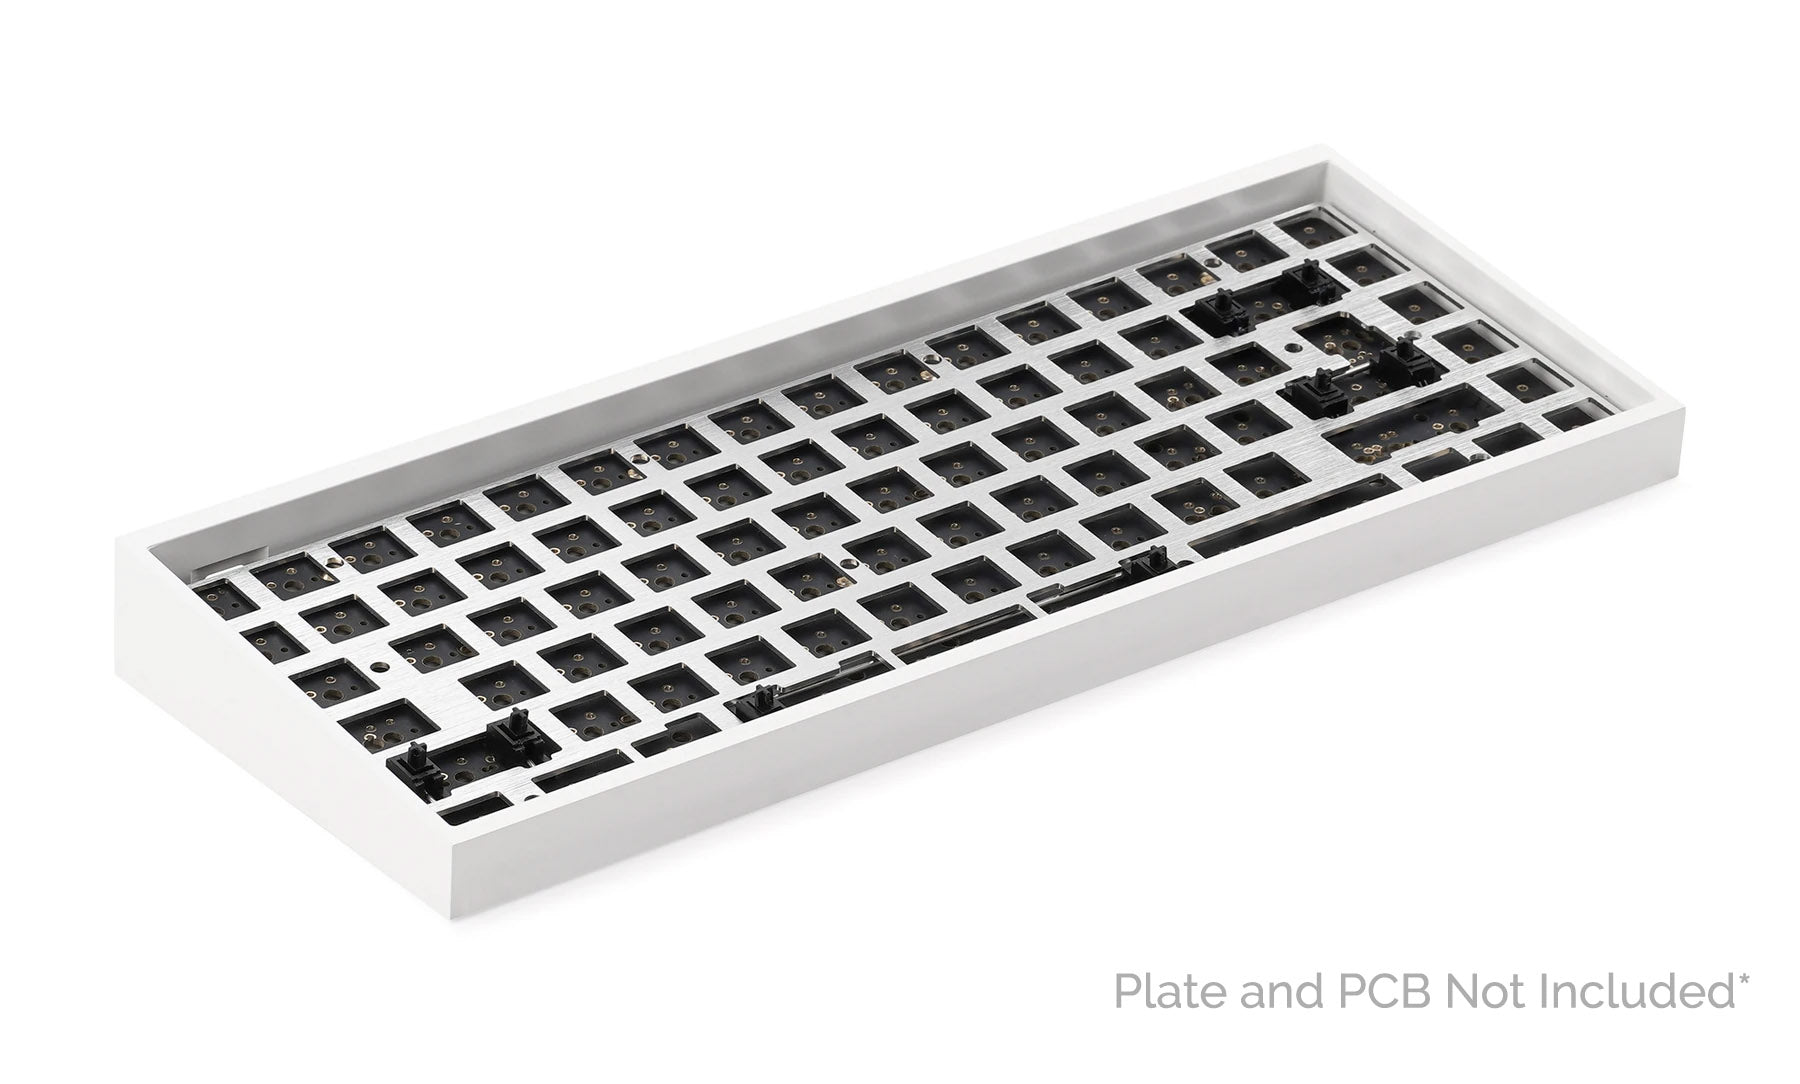 KBDFans Tofu 84 Aluminum Mechanical Keyboard Case MKEUD89PJ0 |42837|